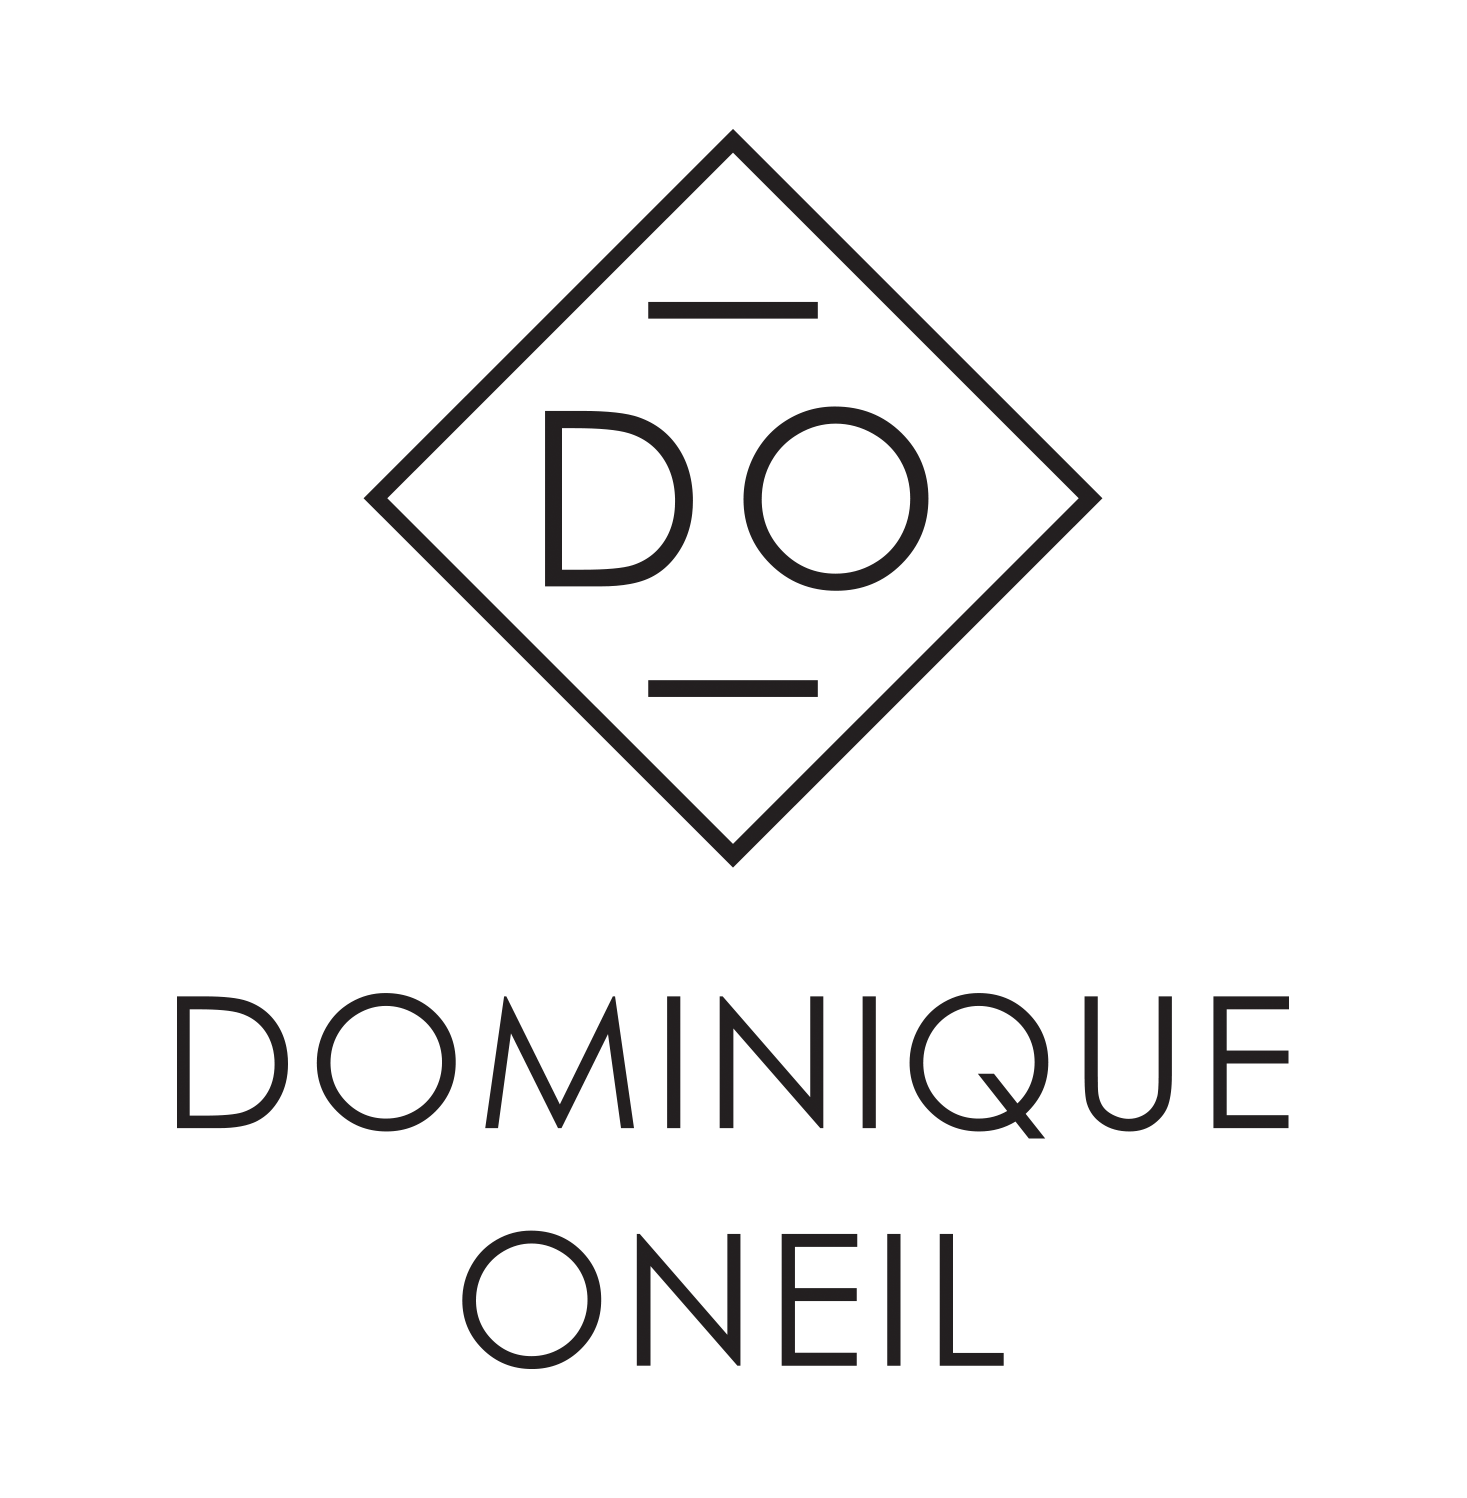 DOMINIQUE ONEIL, Film Programmer